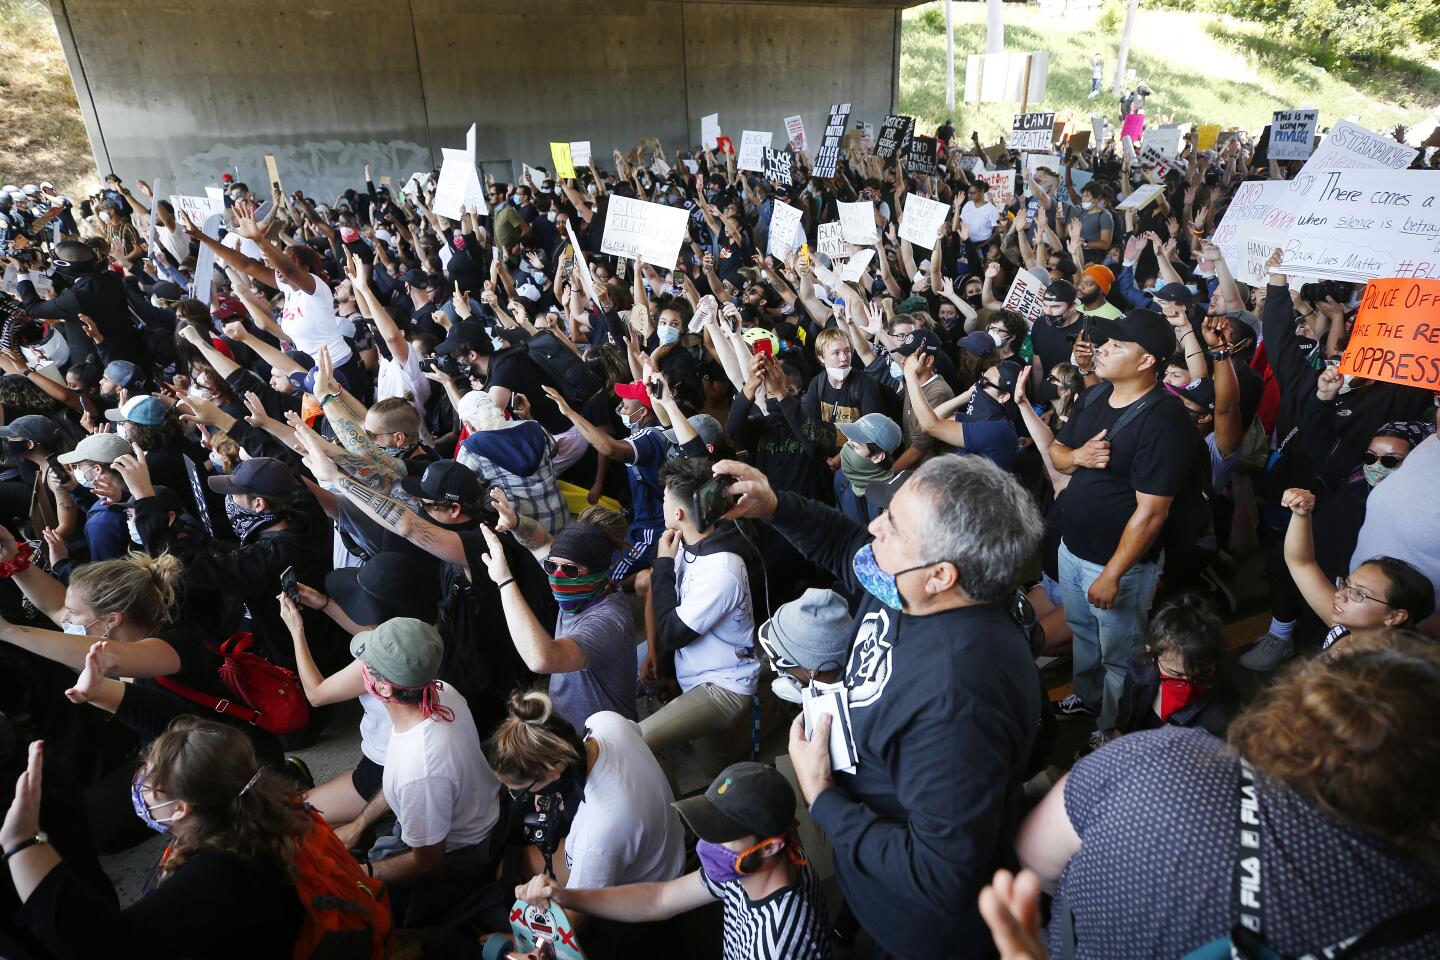 Protest prompts closure of San Diego freeway - The San Diego Union-Tribune